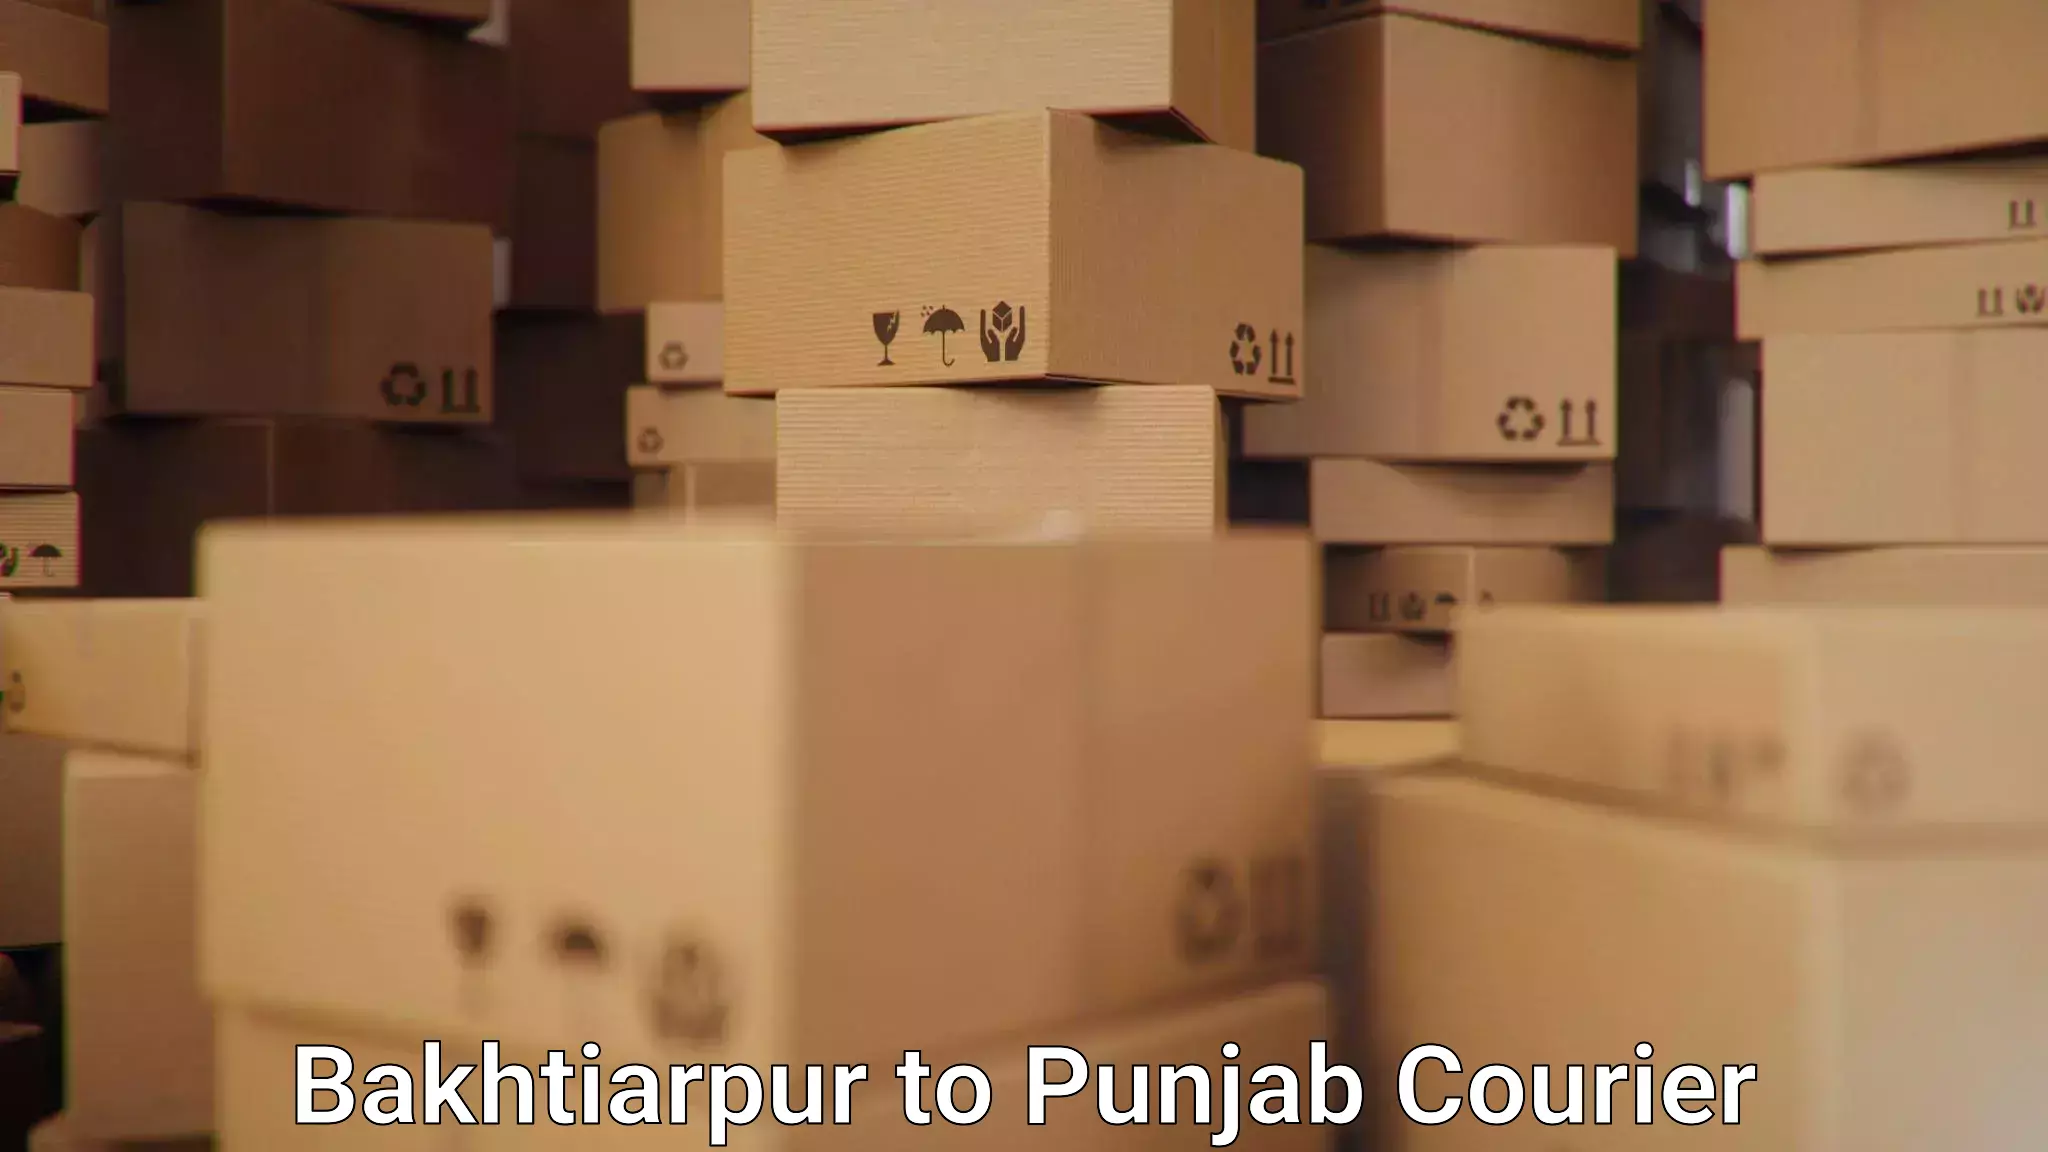 Supply chain delivery Bakhtiarpur to Bathinda